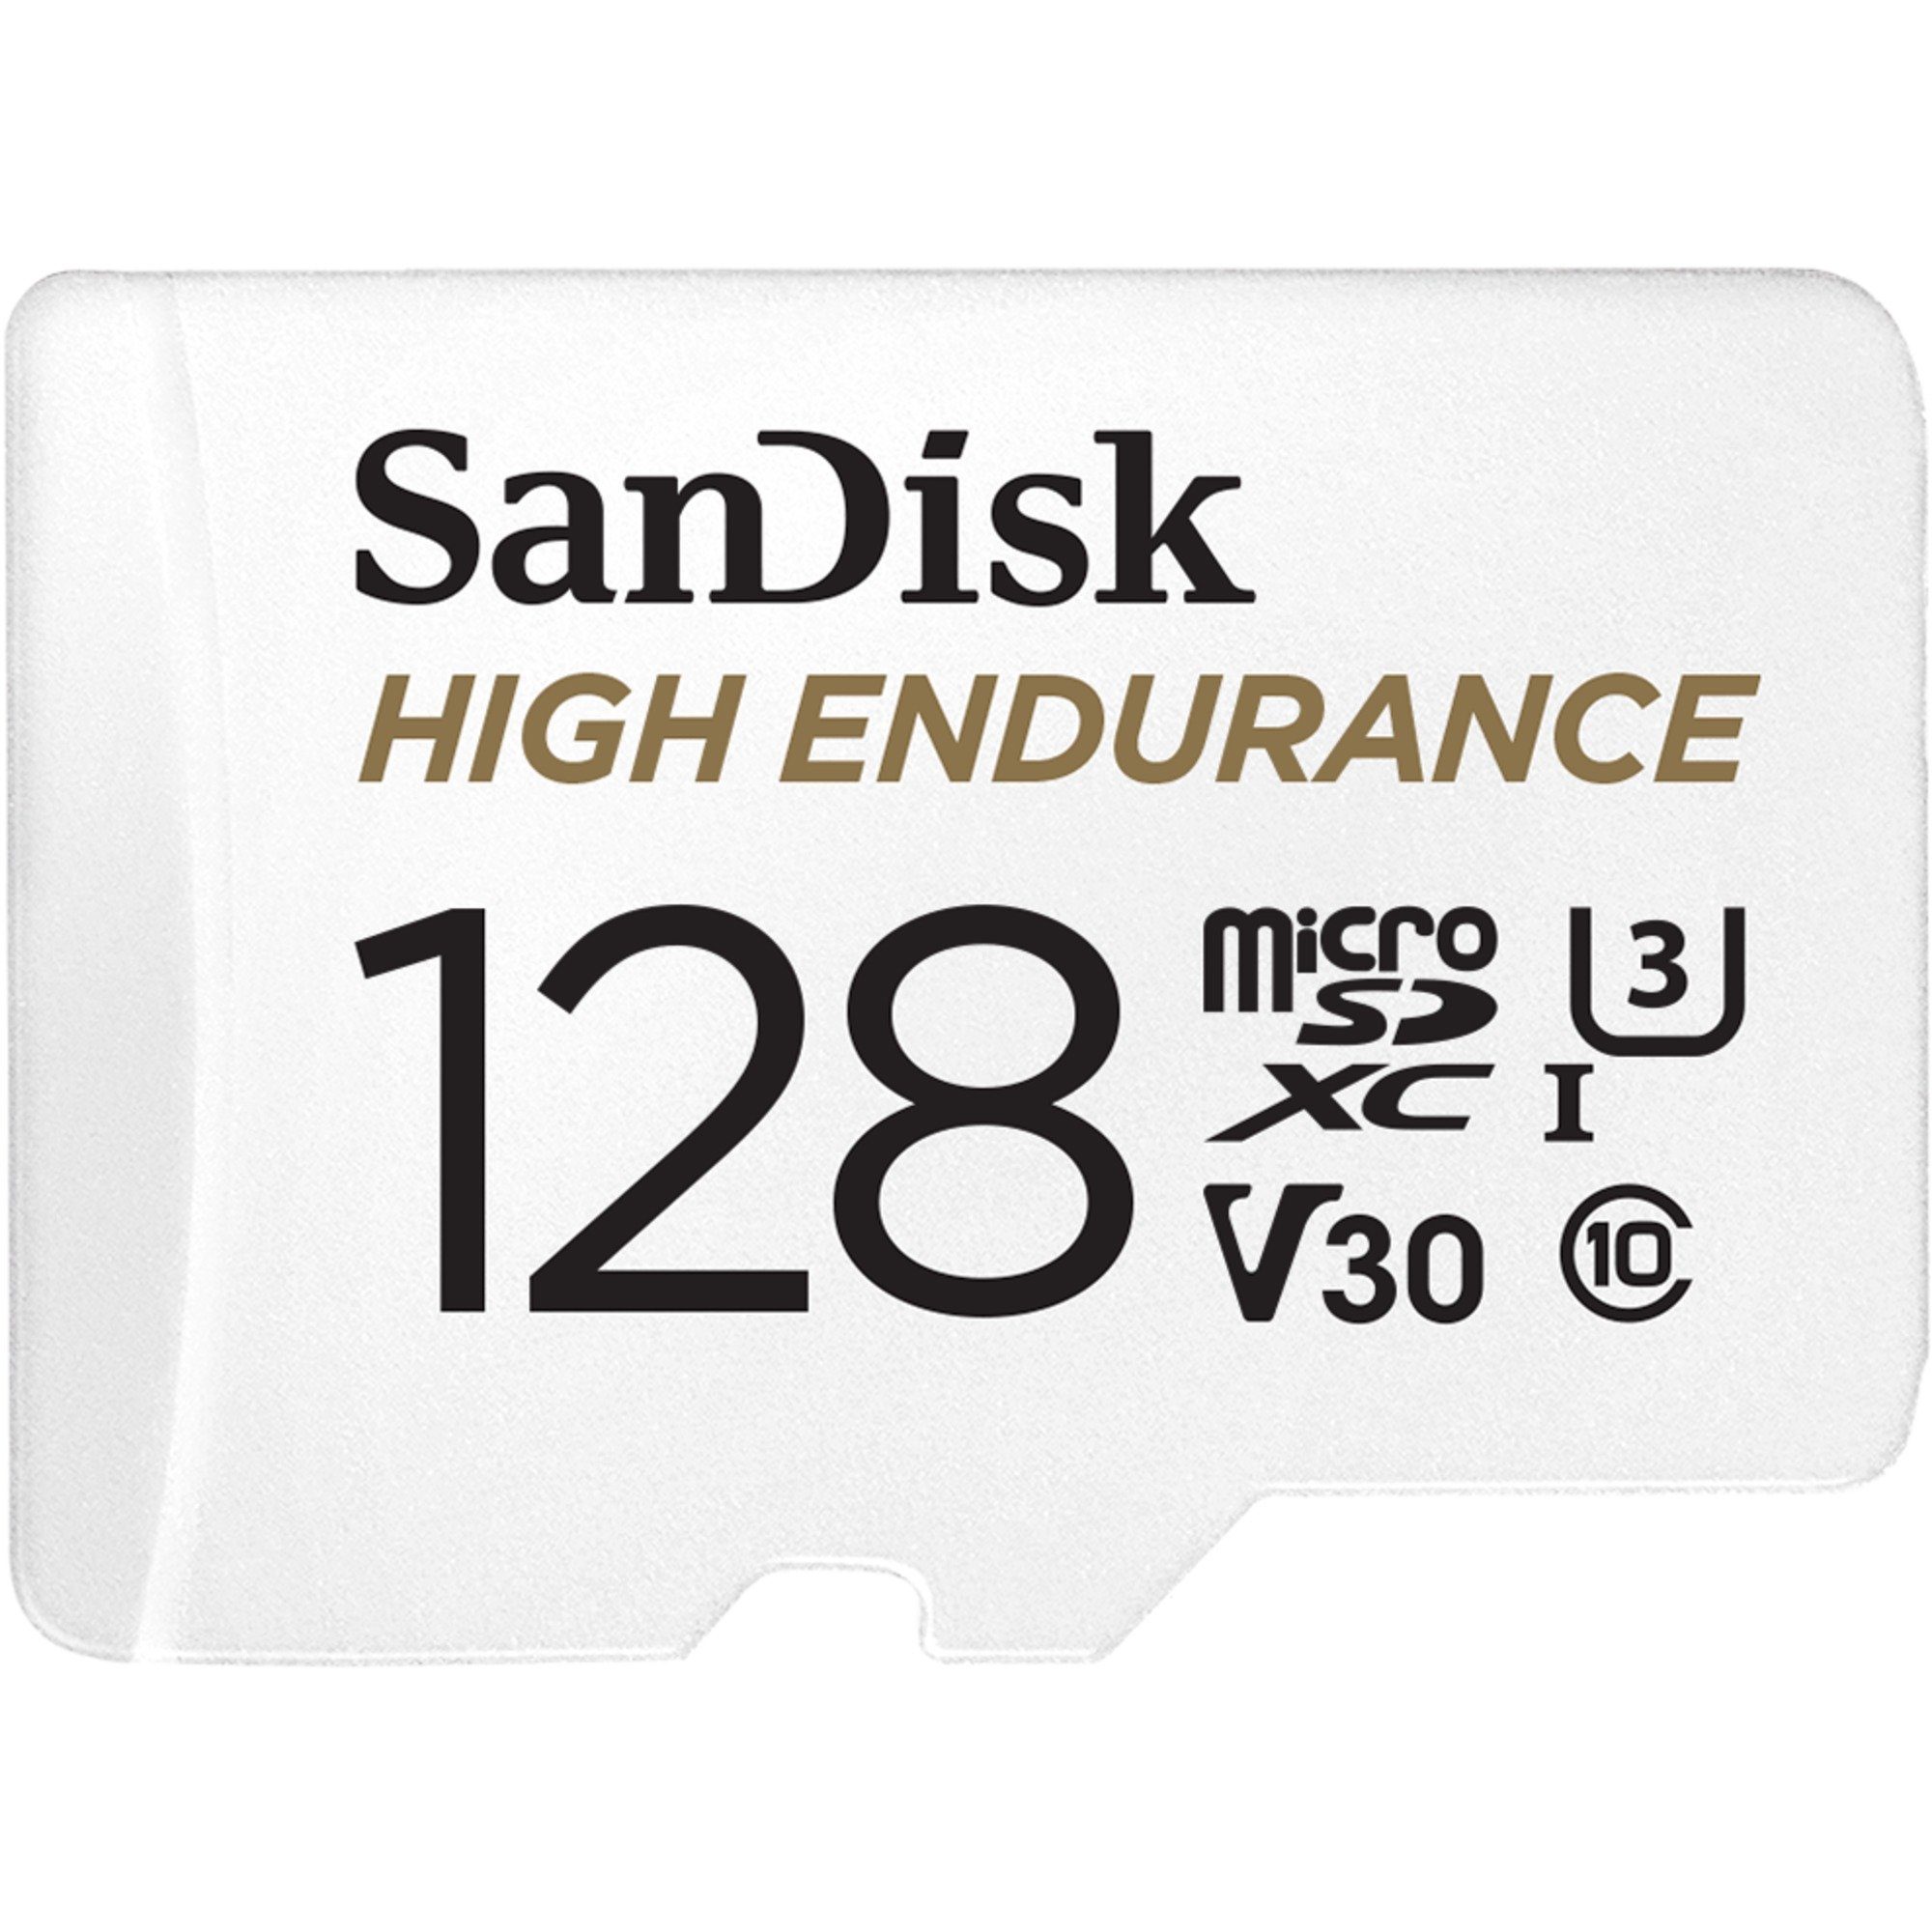 Sandisk 128GB High Endurance Speicherkarte